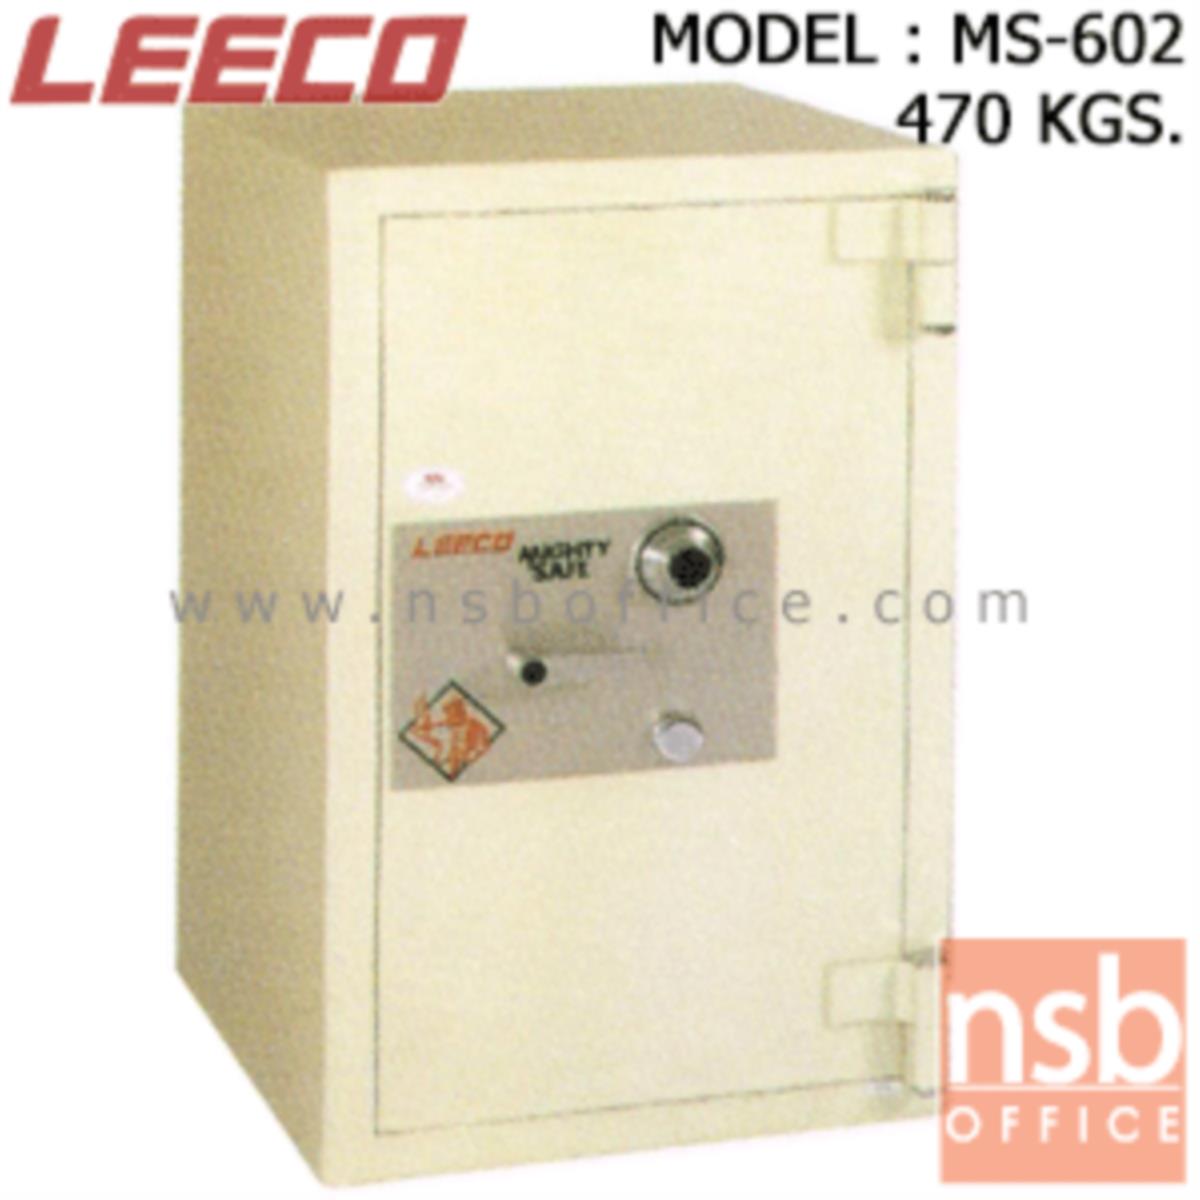 F02A019:ตู้เซฟนิรภัย 470 กก. ลีโก้ รุ่น LEECO-MS-602 มี 1 กุญแจ 1 รหัส (เปลี่ยนรหัสไม่ได้)   